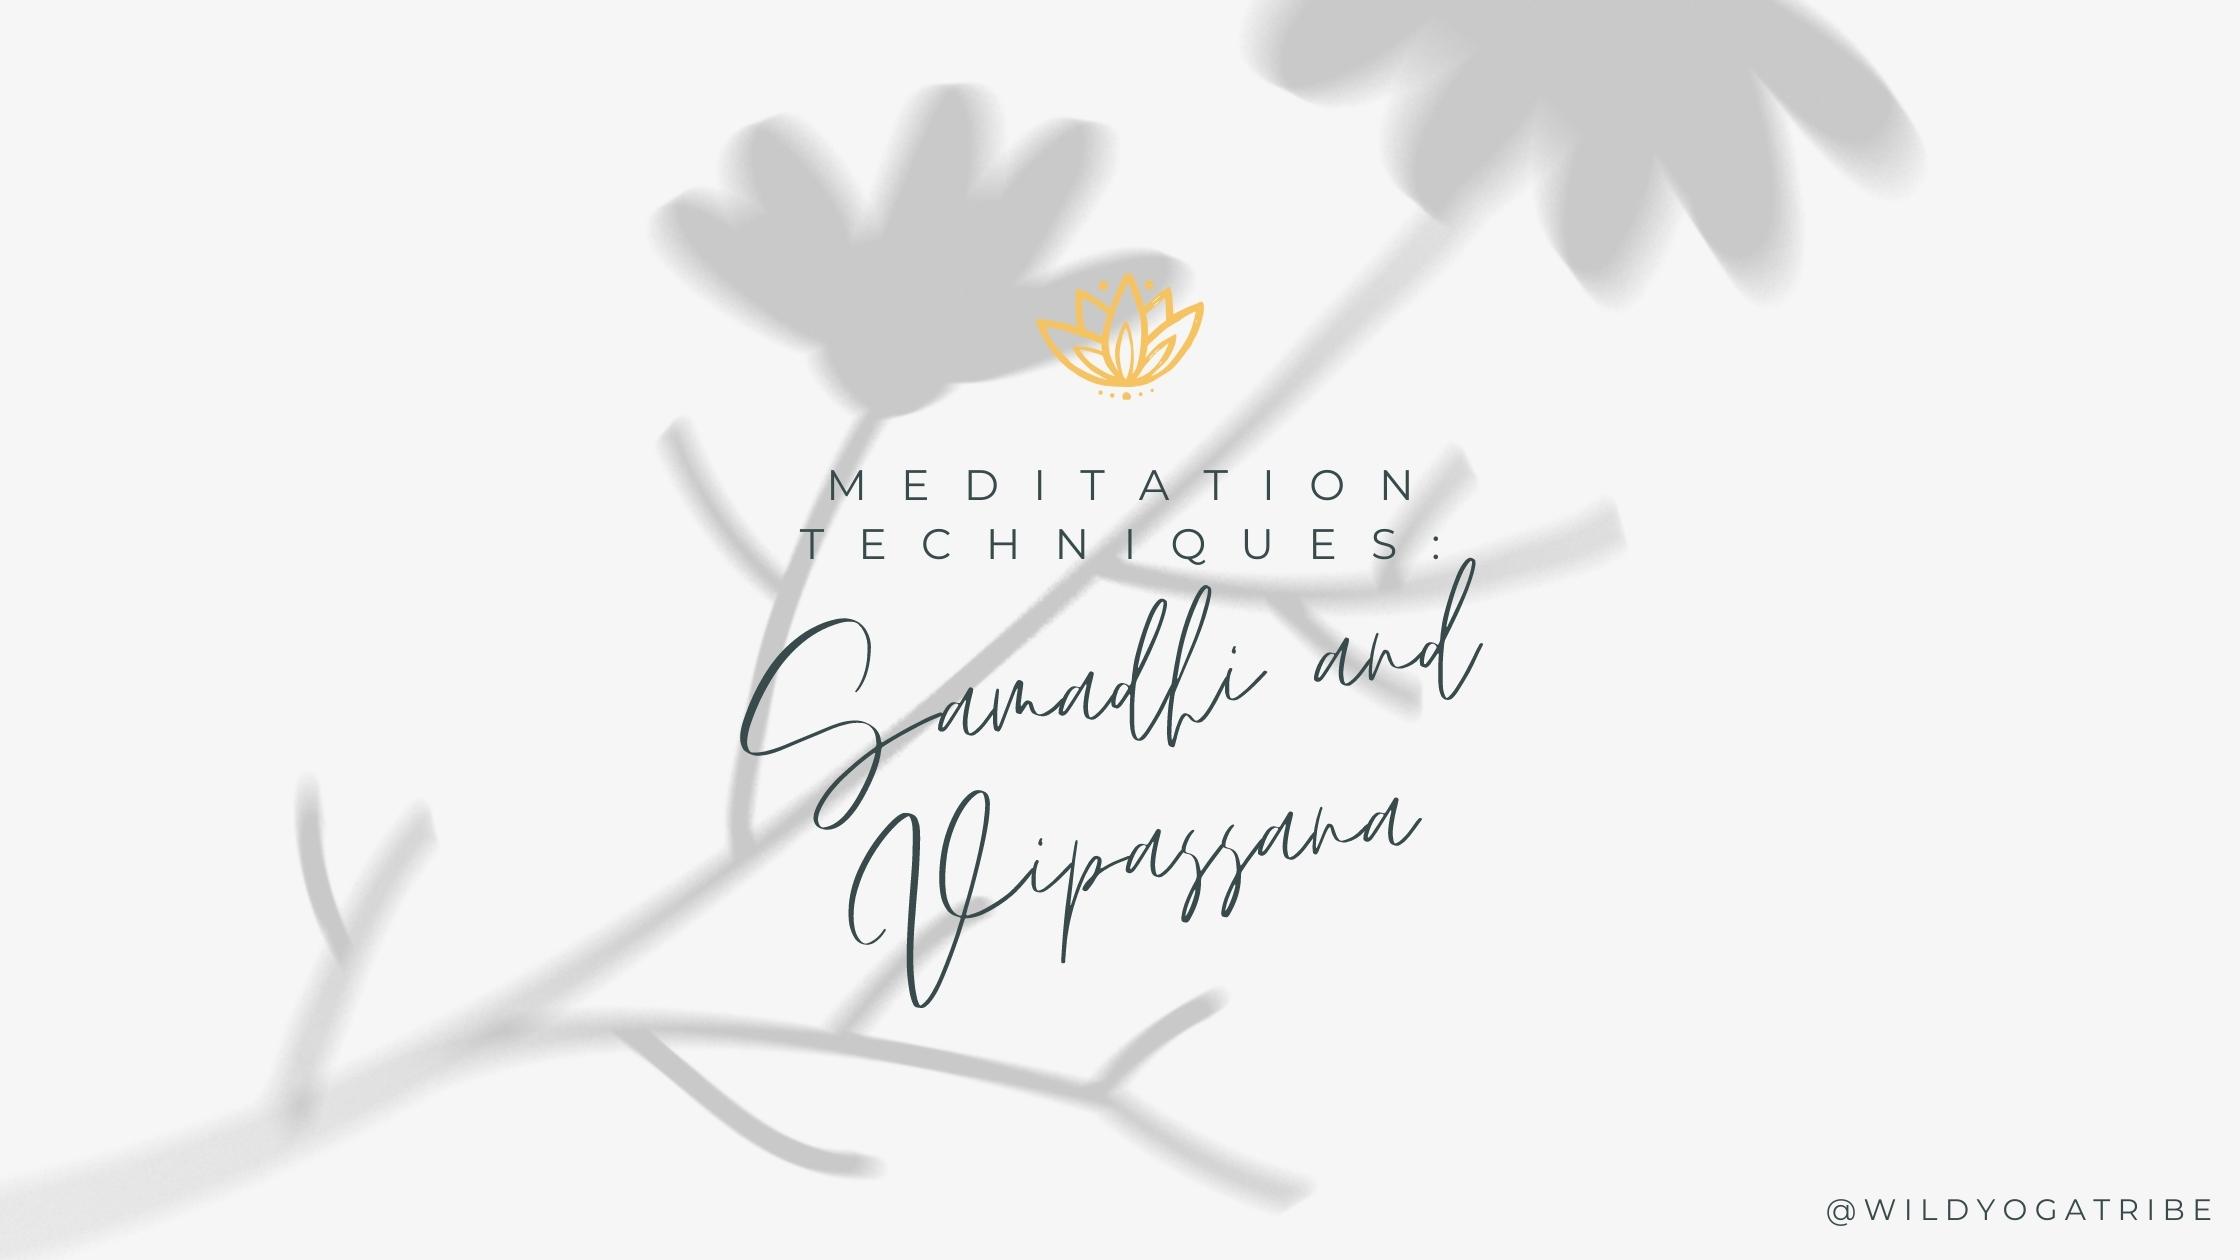 Meditation Techniques: Samadhi and Vipassana